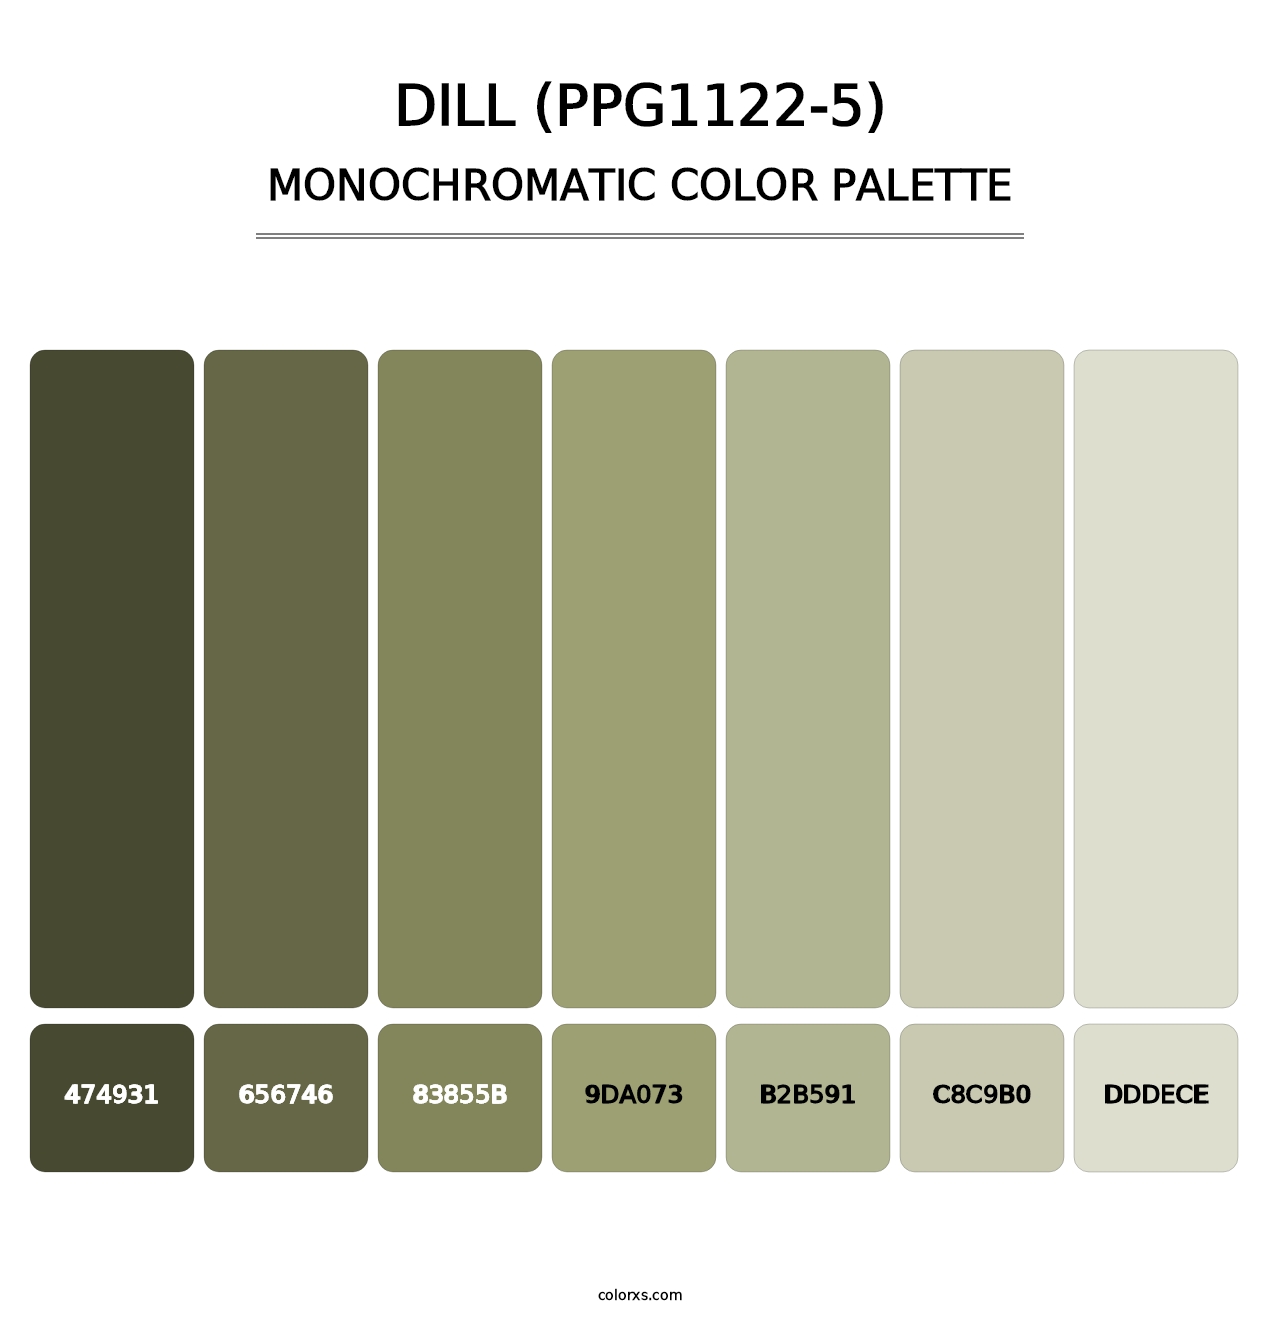 Dill (PPG1122-5) - Monochromatic Color Palette